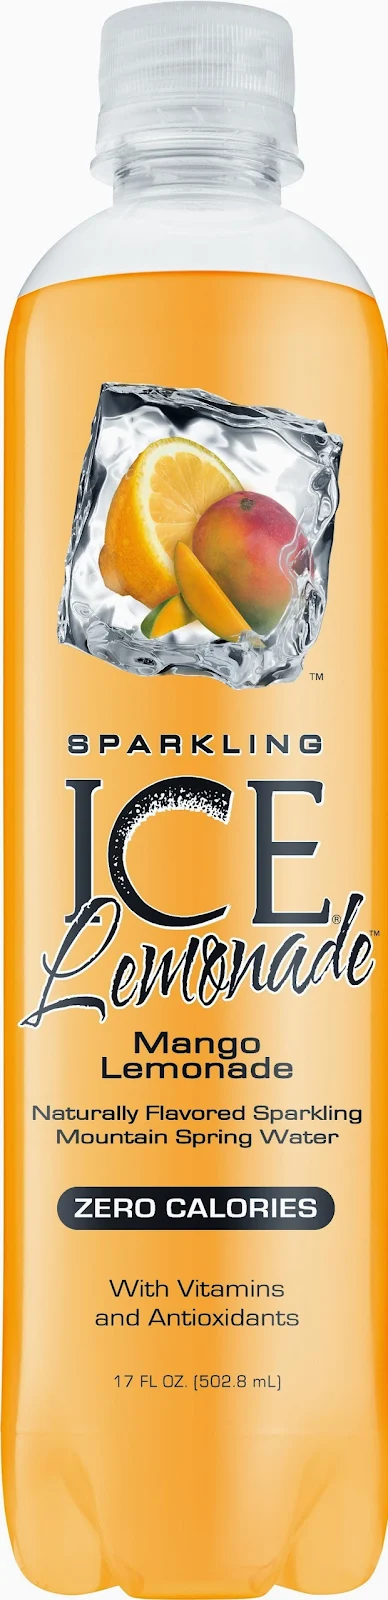 SparklingICE Mango Lemonade